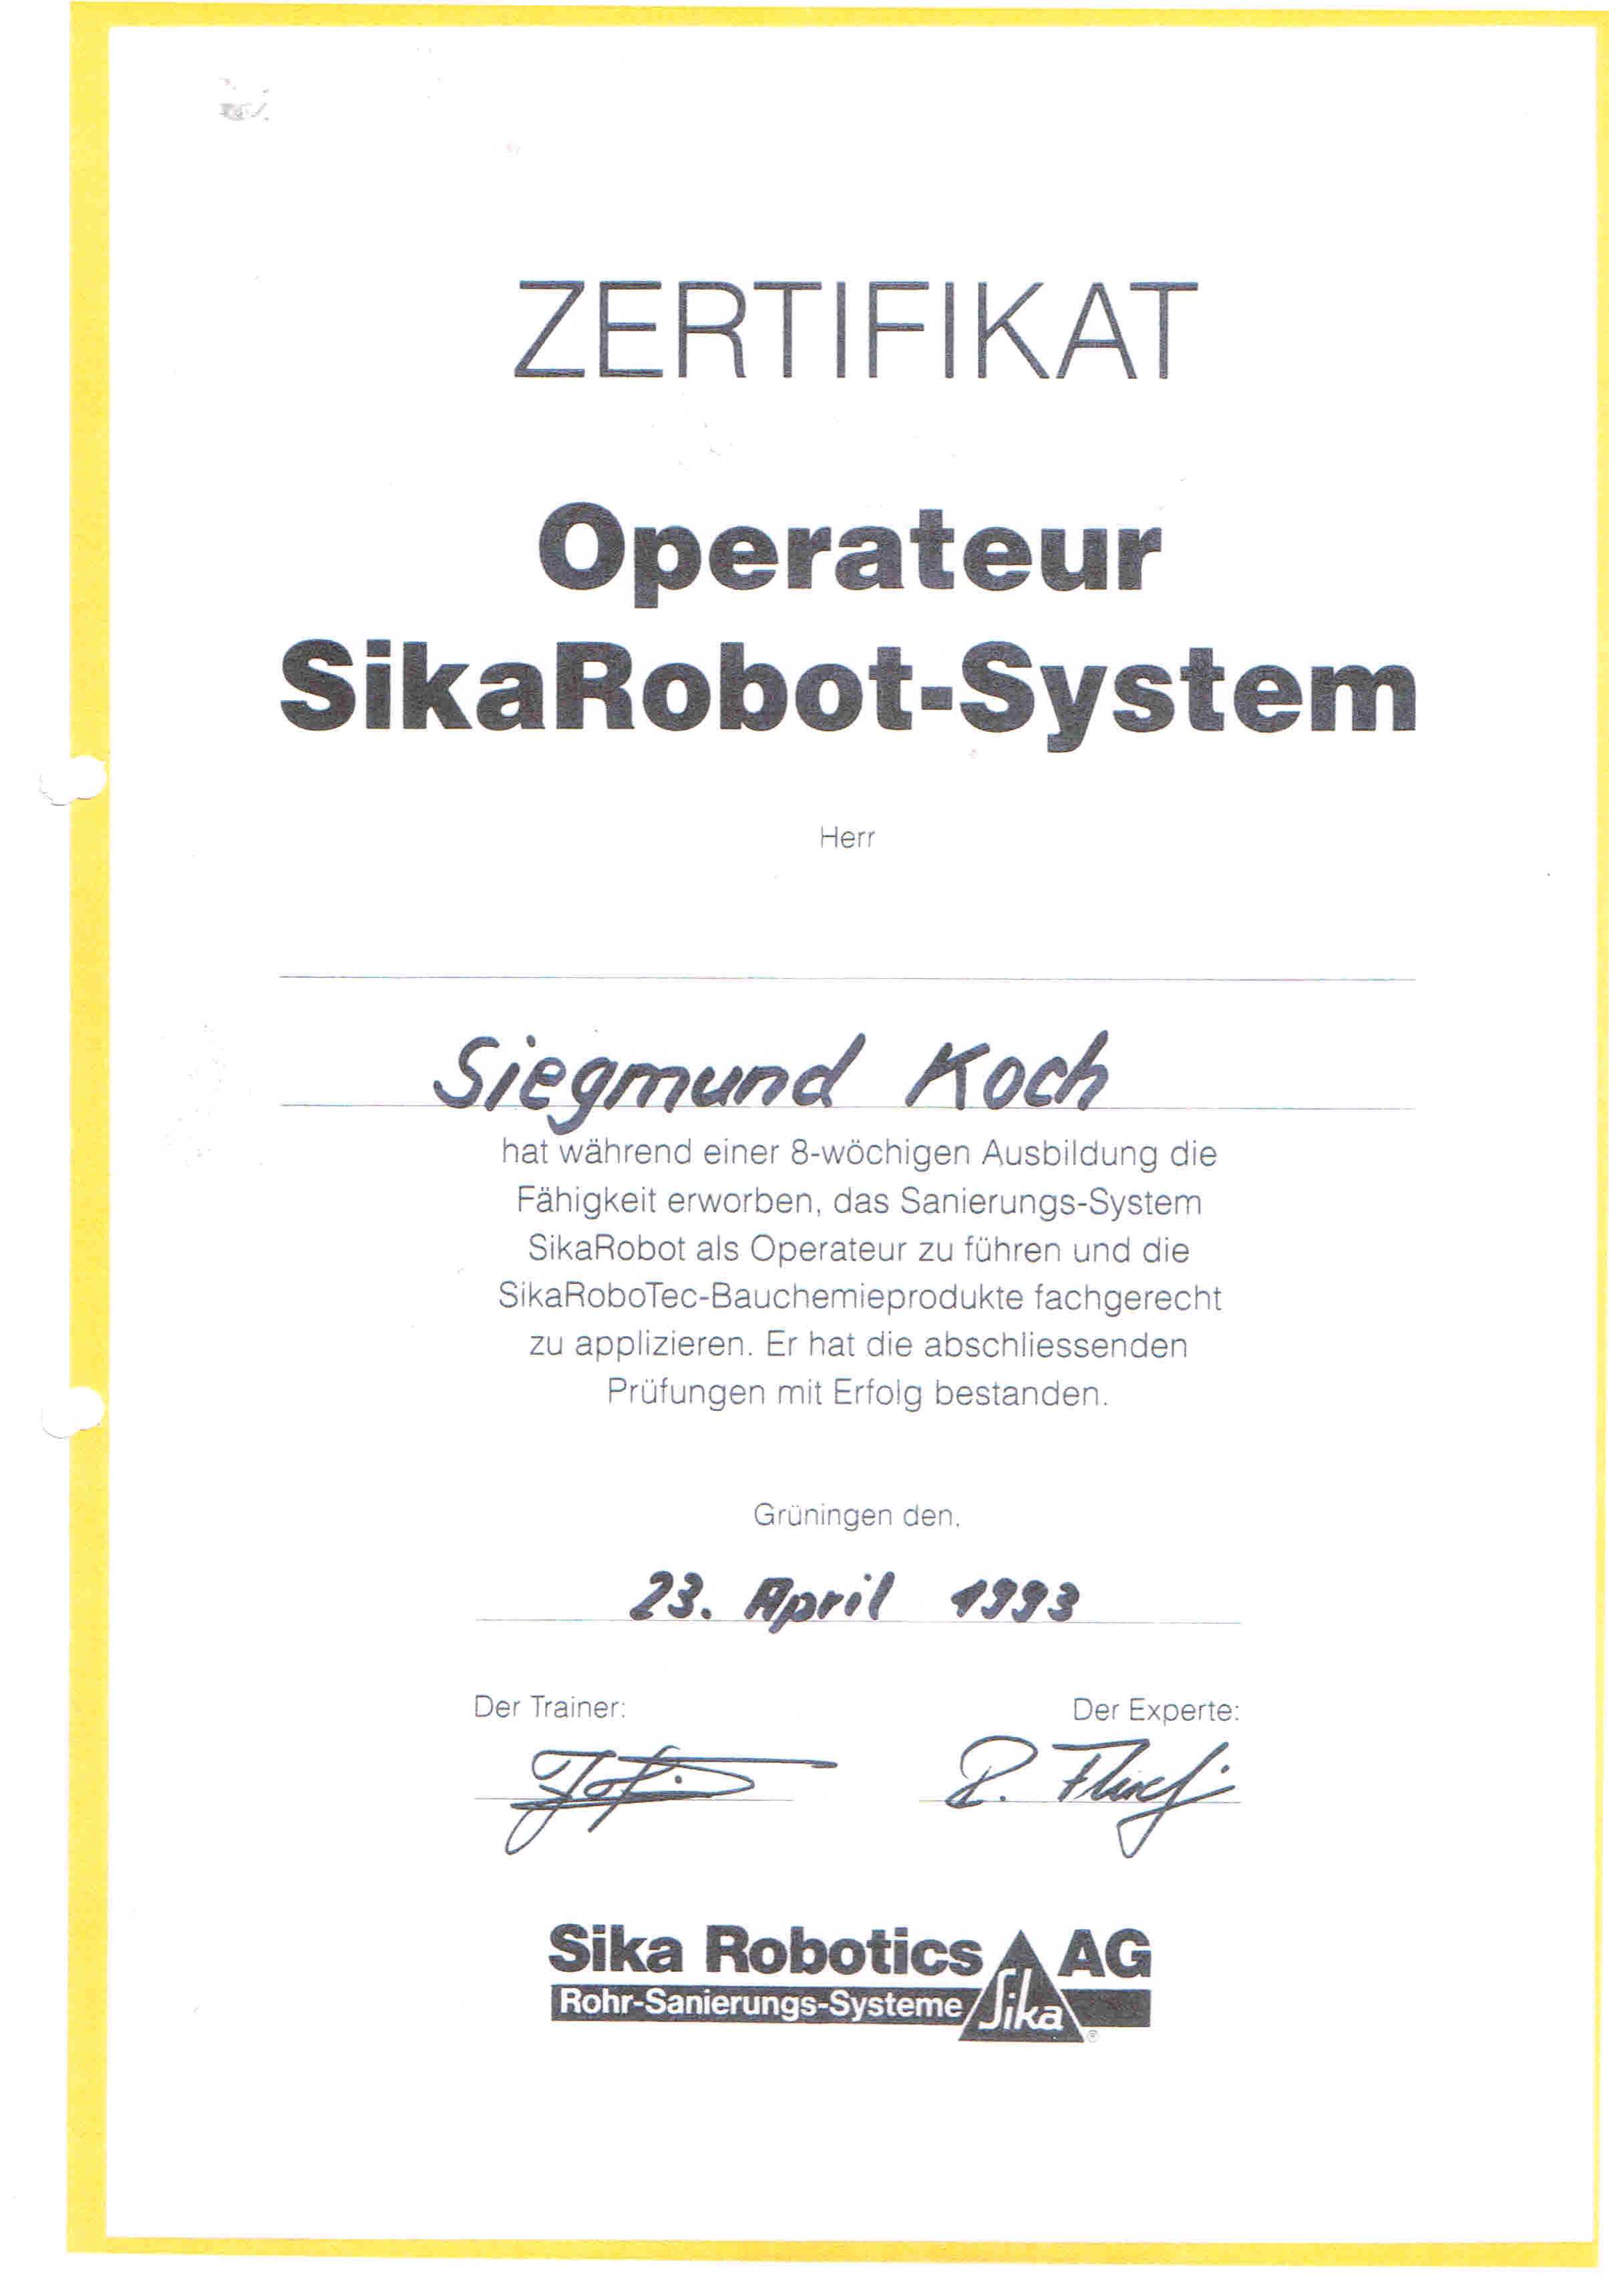 Zertifikat Operateur SikaRobot-System Siegmund Koch